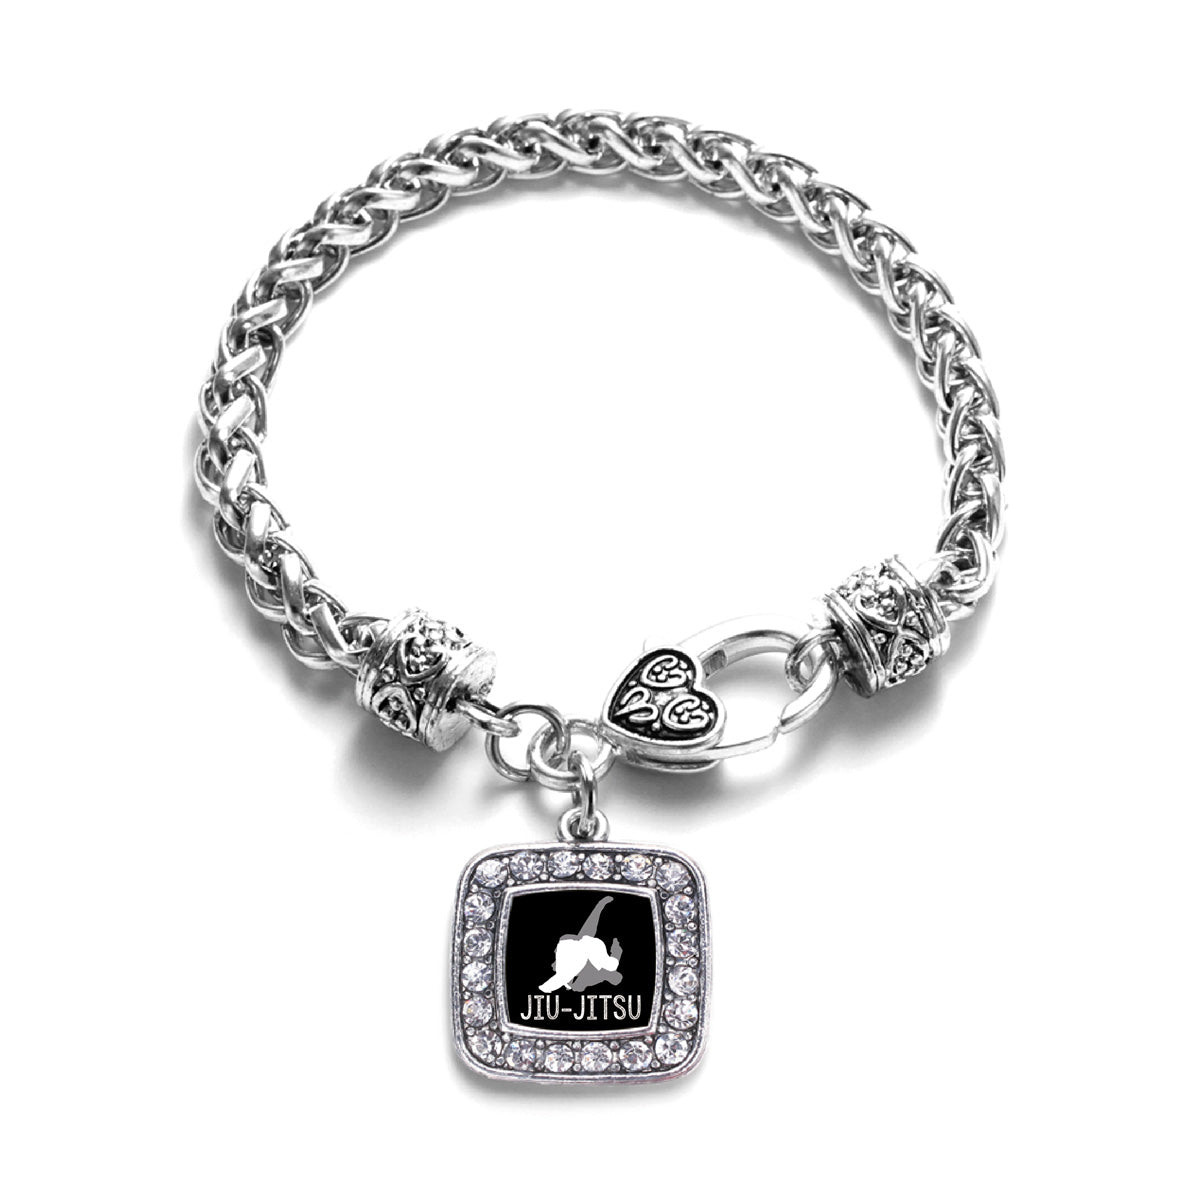 Silver Jiu-jitsu Square Charm Braided Bracelet